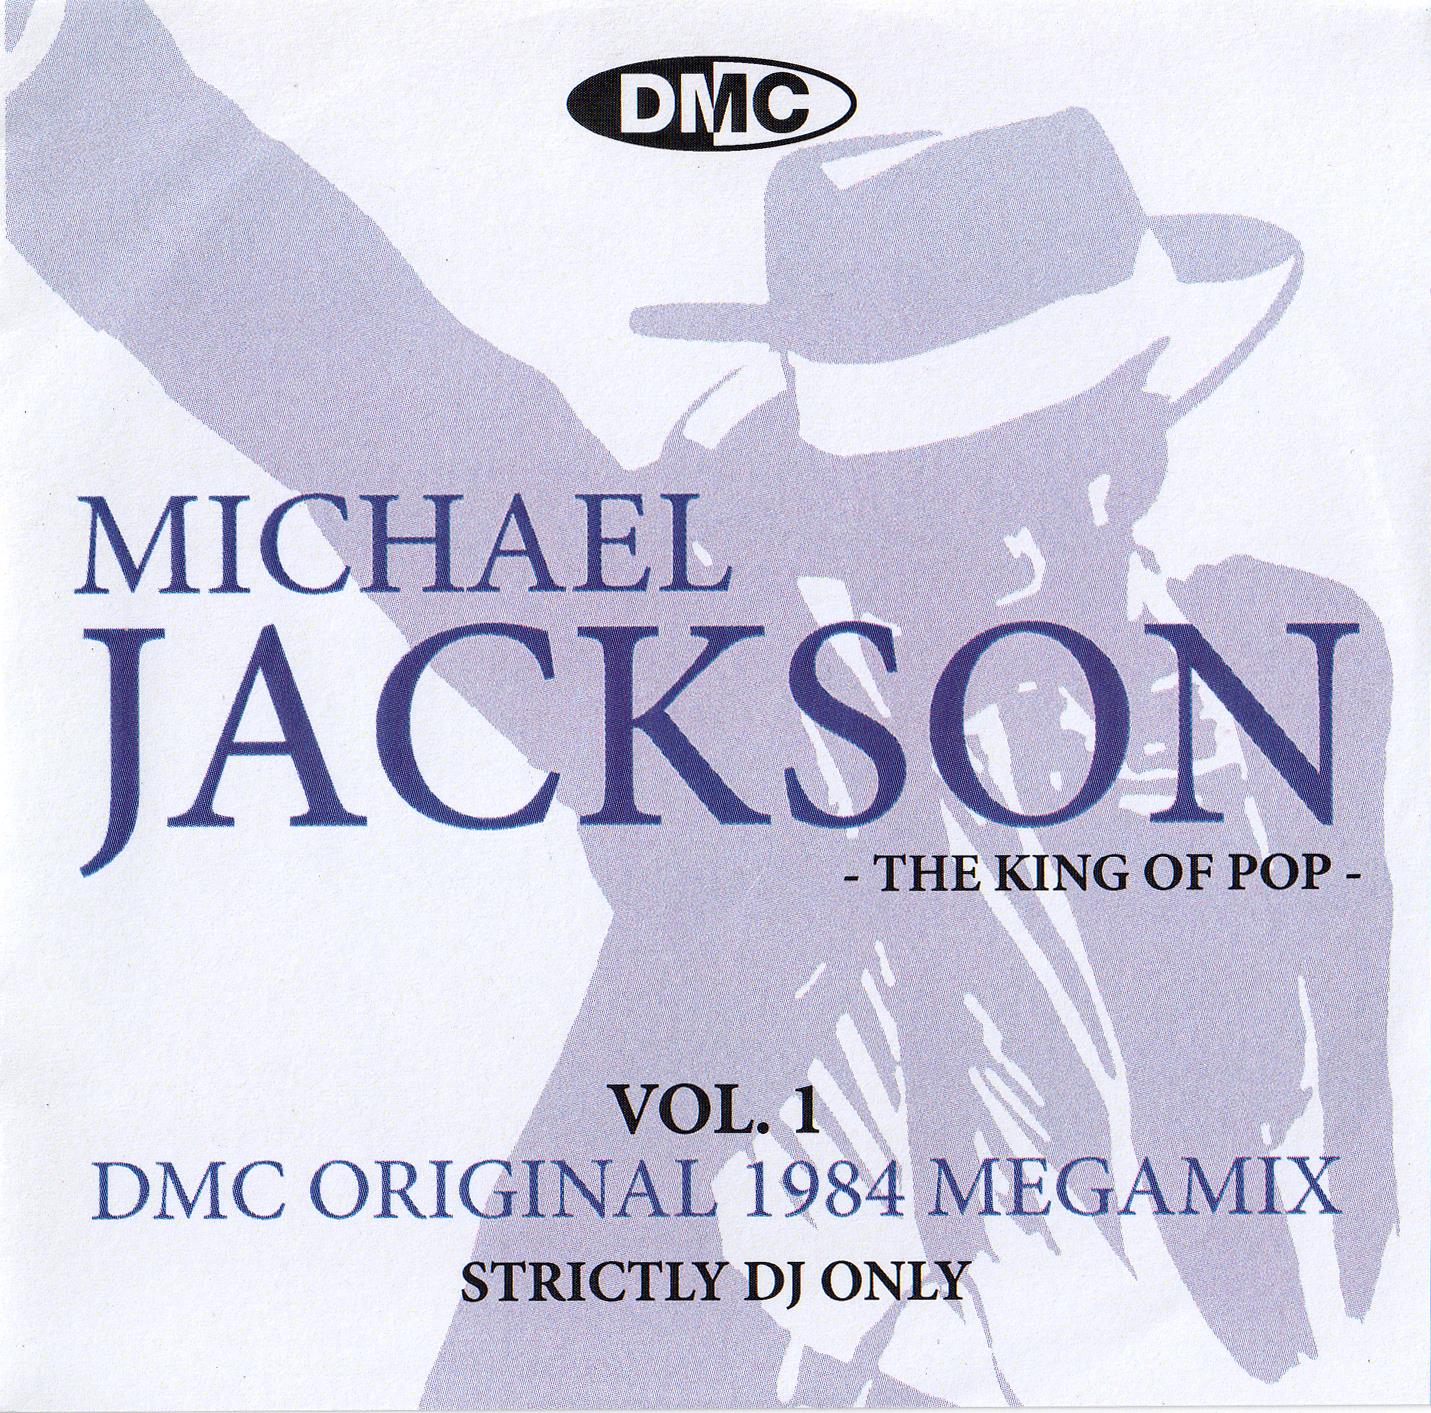 Michael Jackson - DMC Original 1984 Megamix (Cdm)(1984)